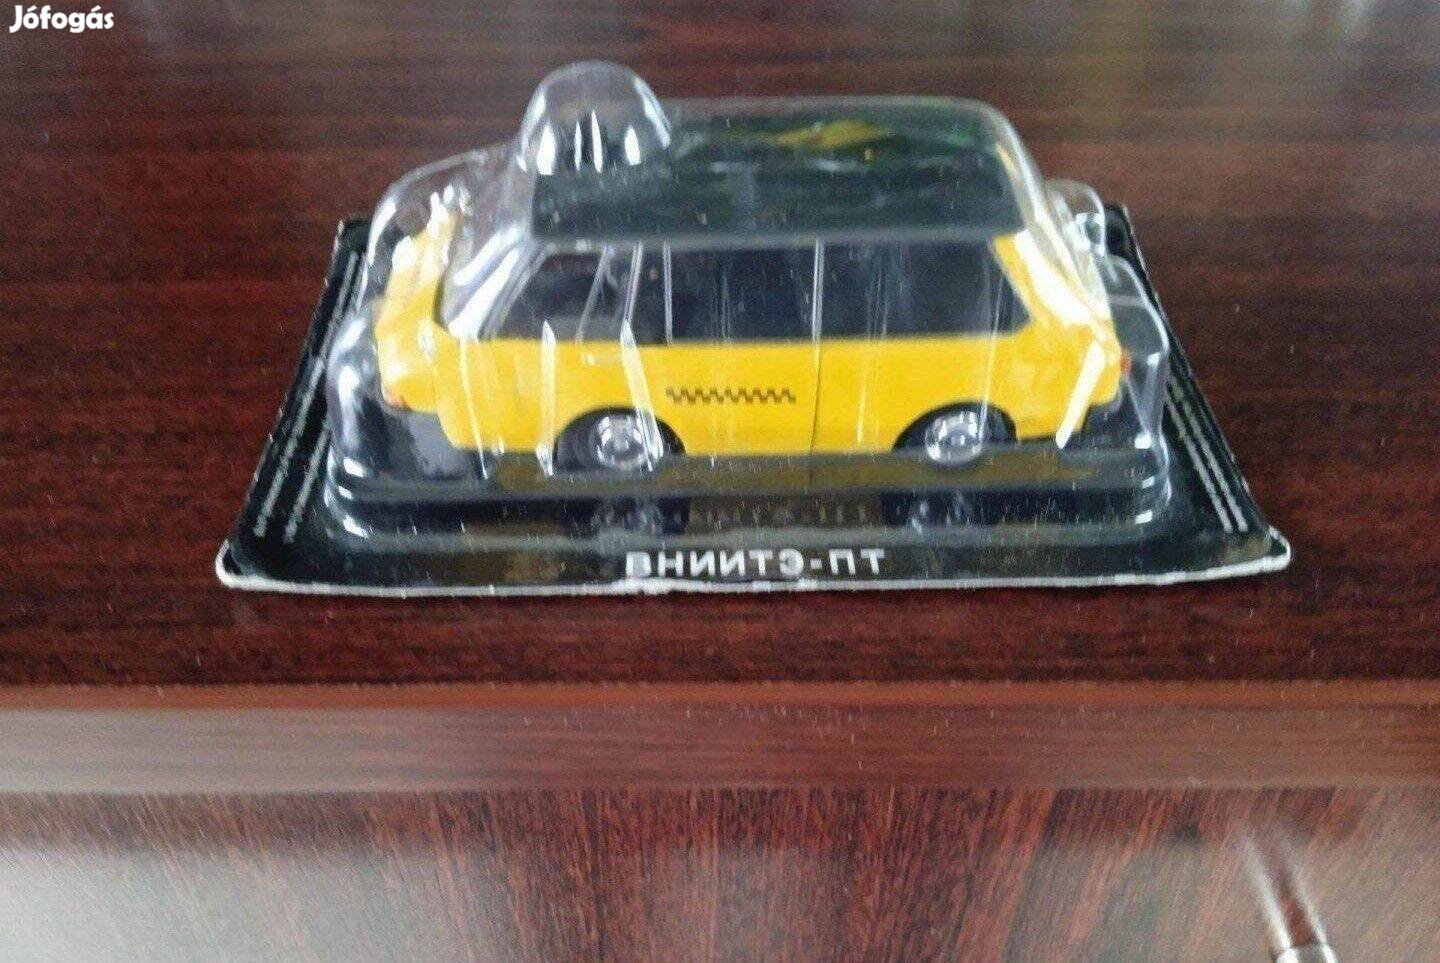 Vniite-PT "taxi" kisauto modell 1/43 Eladó